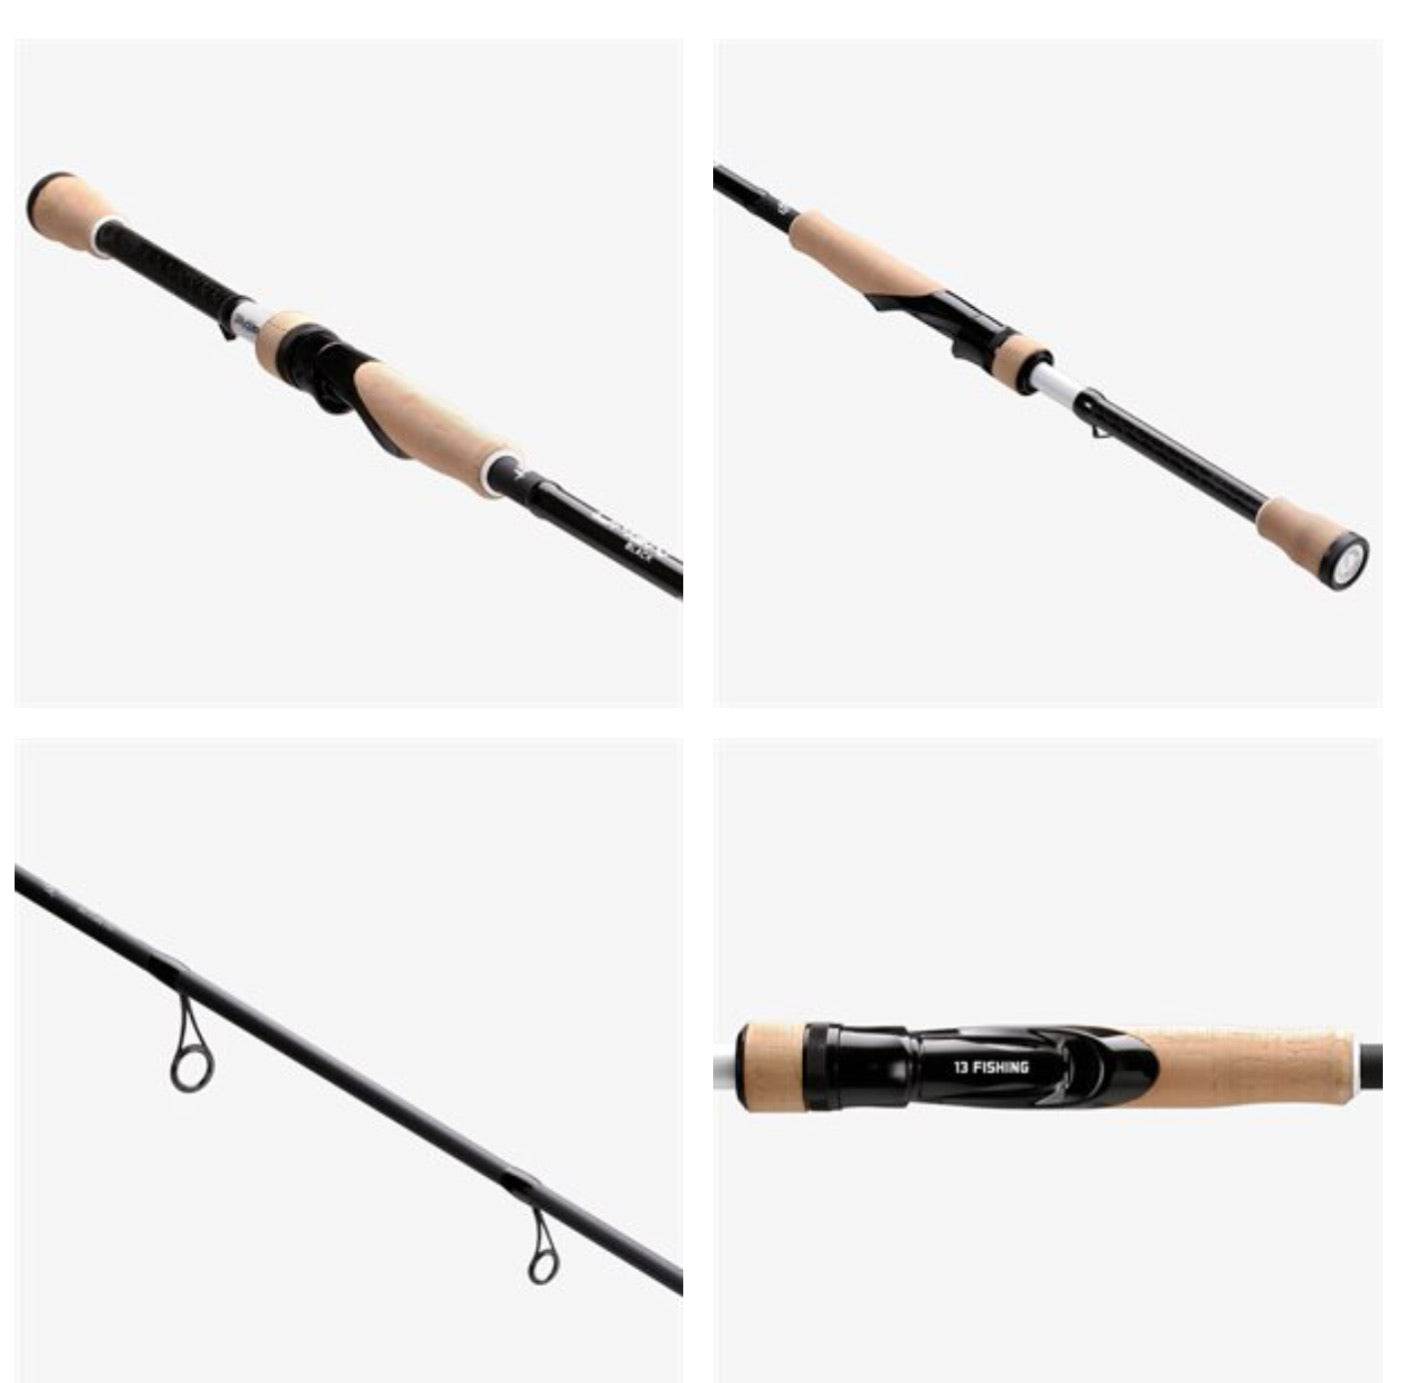 13 Fishing Spinning Rods - LOTWSHQ